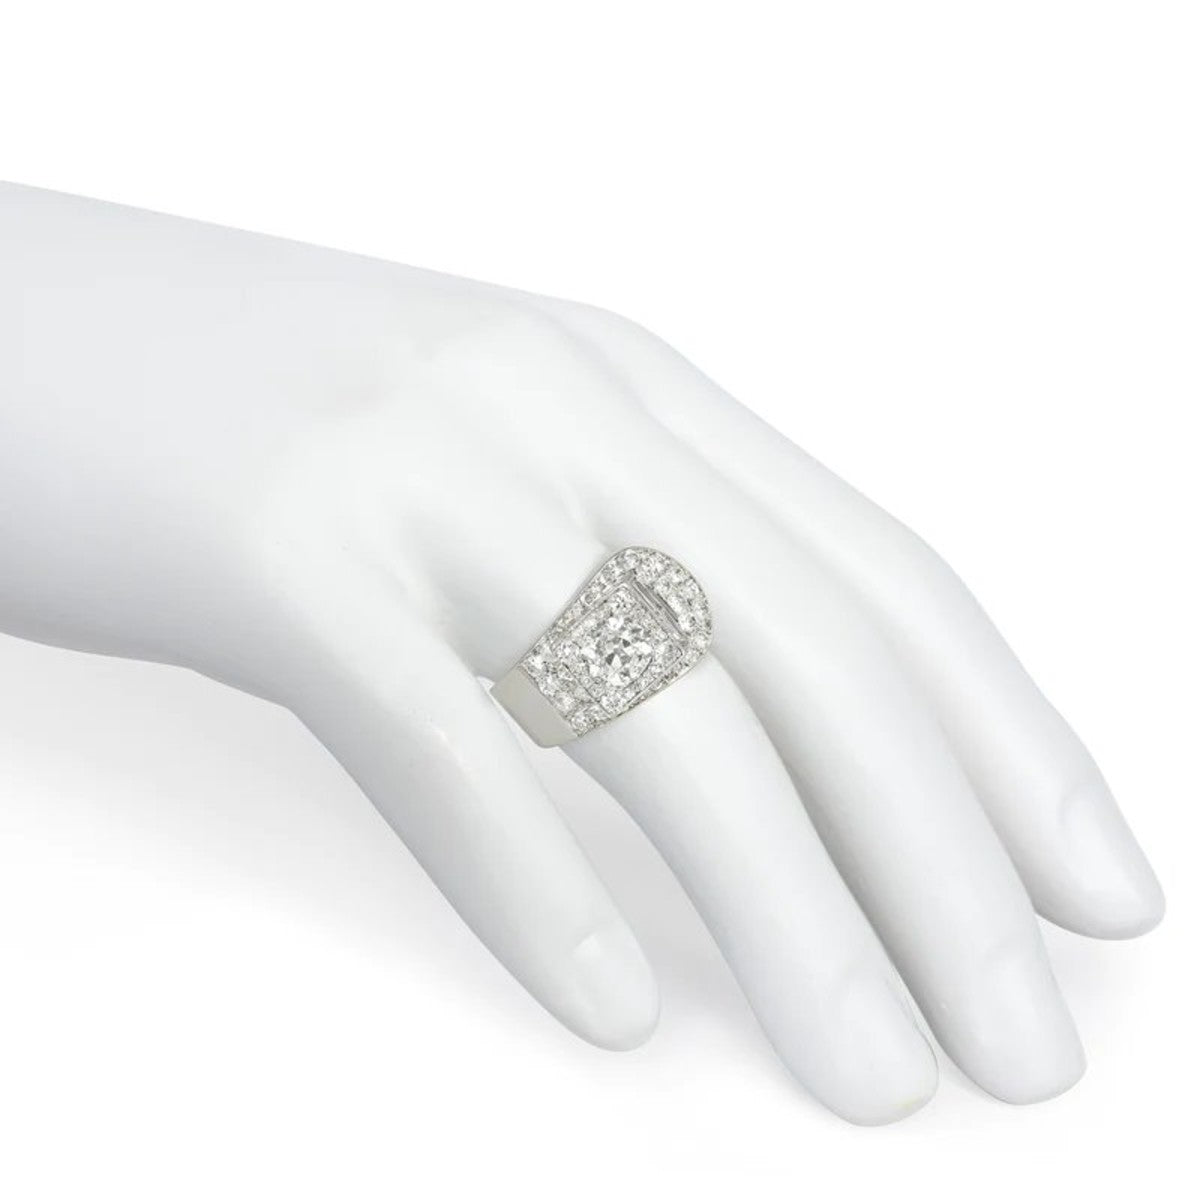 French Art Deco Platinum Diamond Stylized Buckle Ring on finger